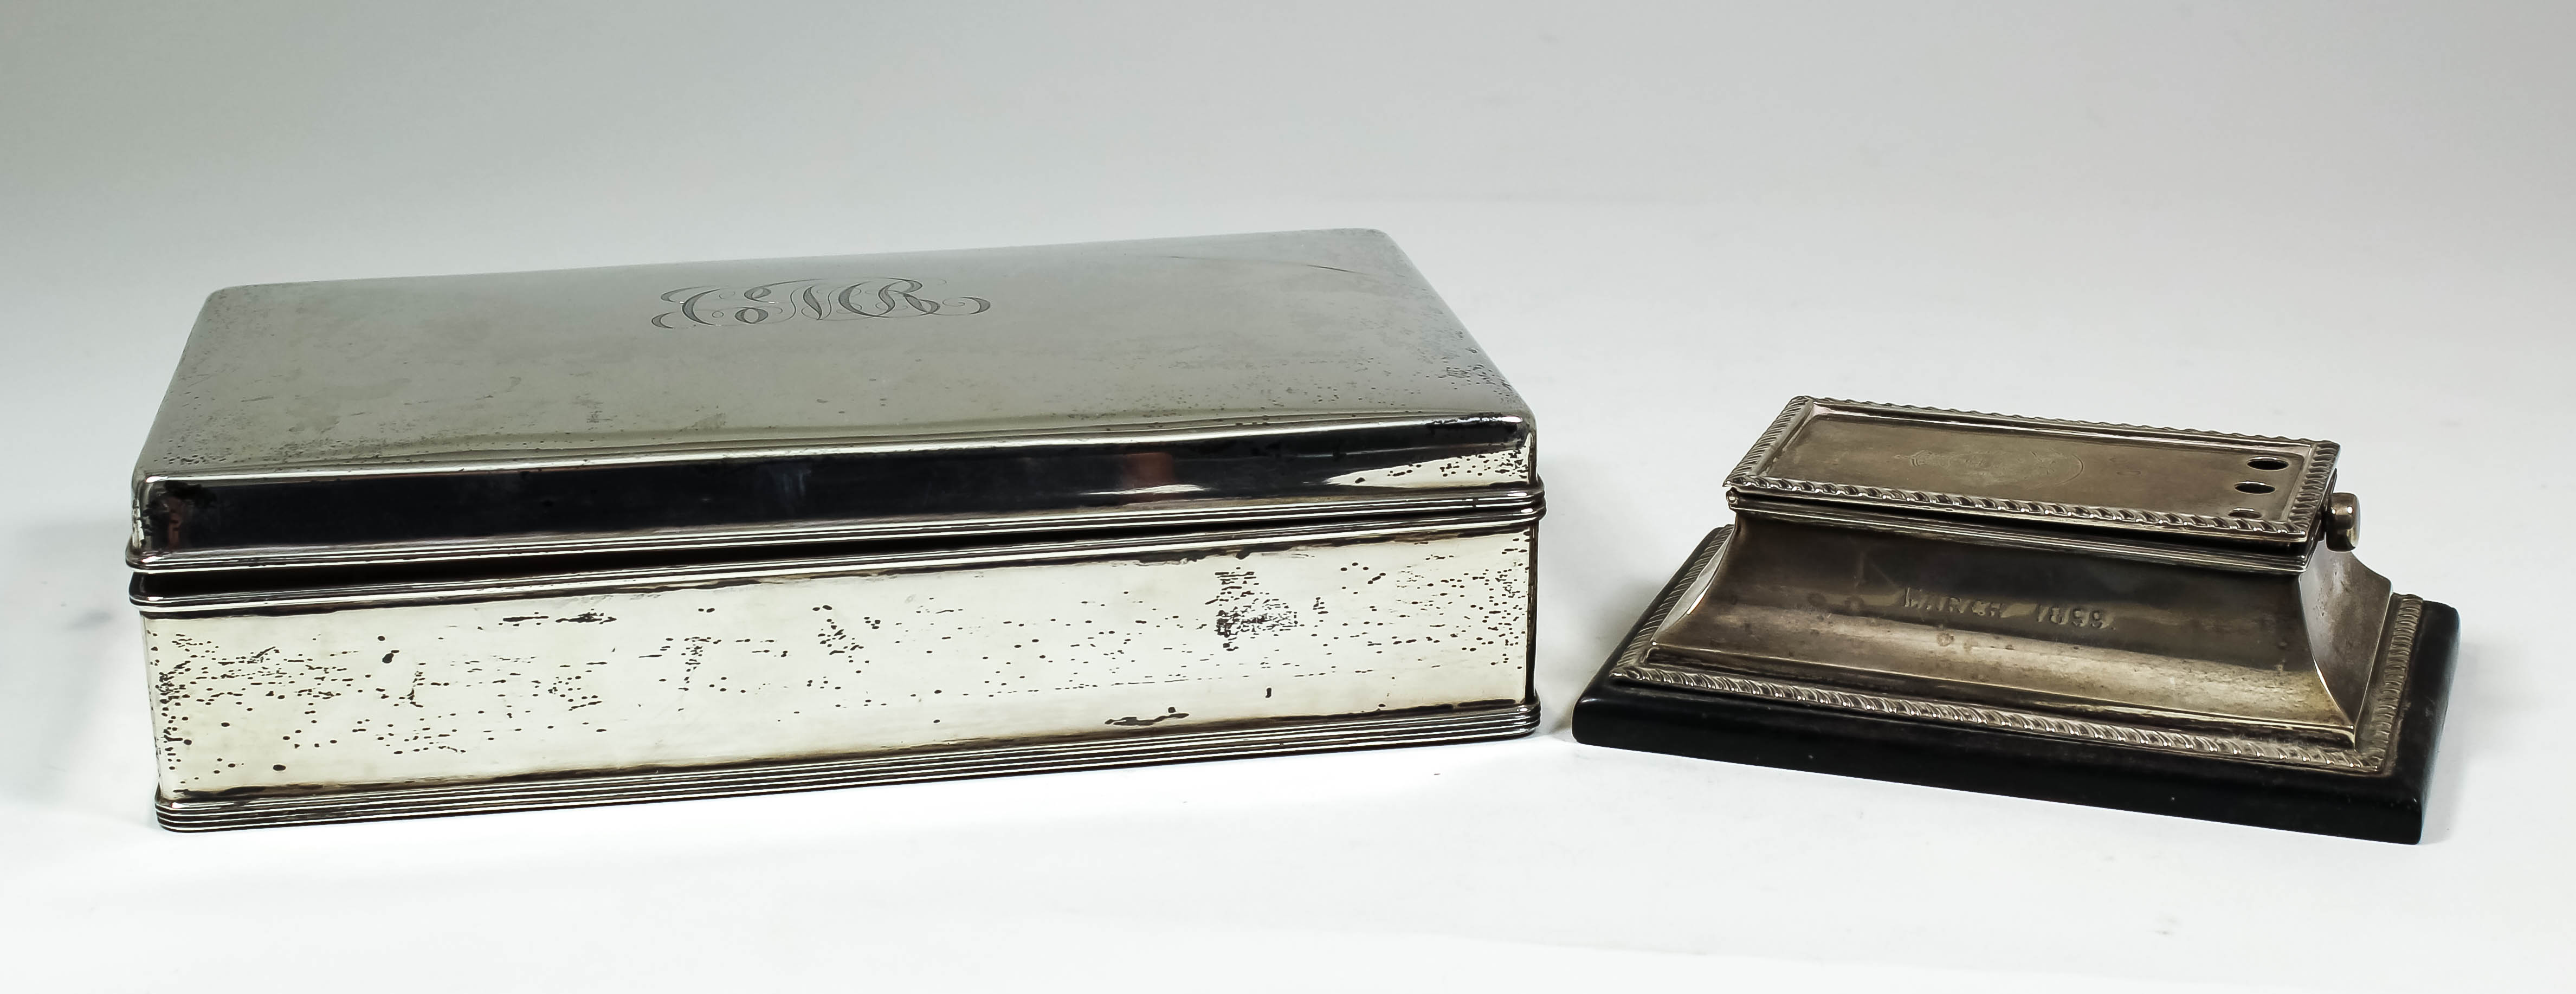 An Edward VII silver rectangular cigarette box, 9.25ins x 5.25ins x 2.25ins high, by The Goldsmiths